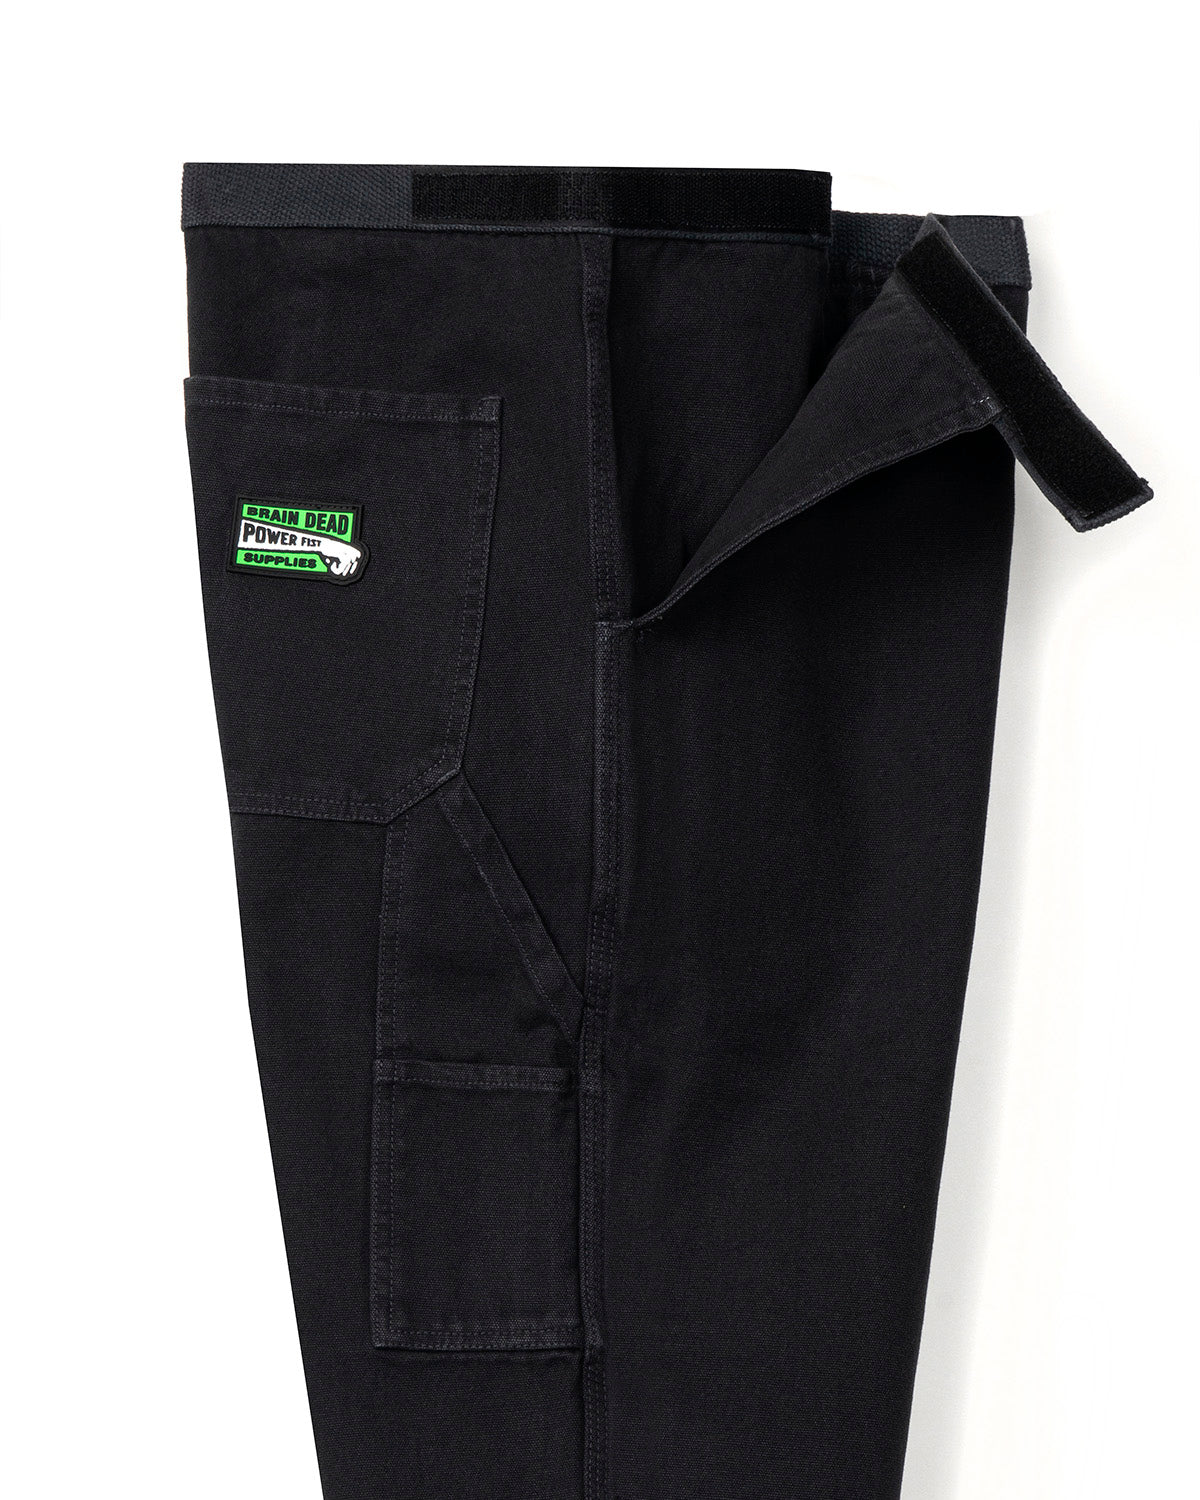 Washed Hard/Softwear Carpenter Pant - Black 3